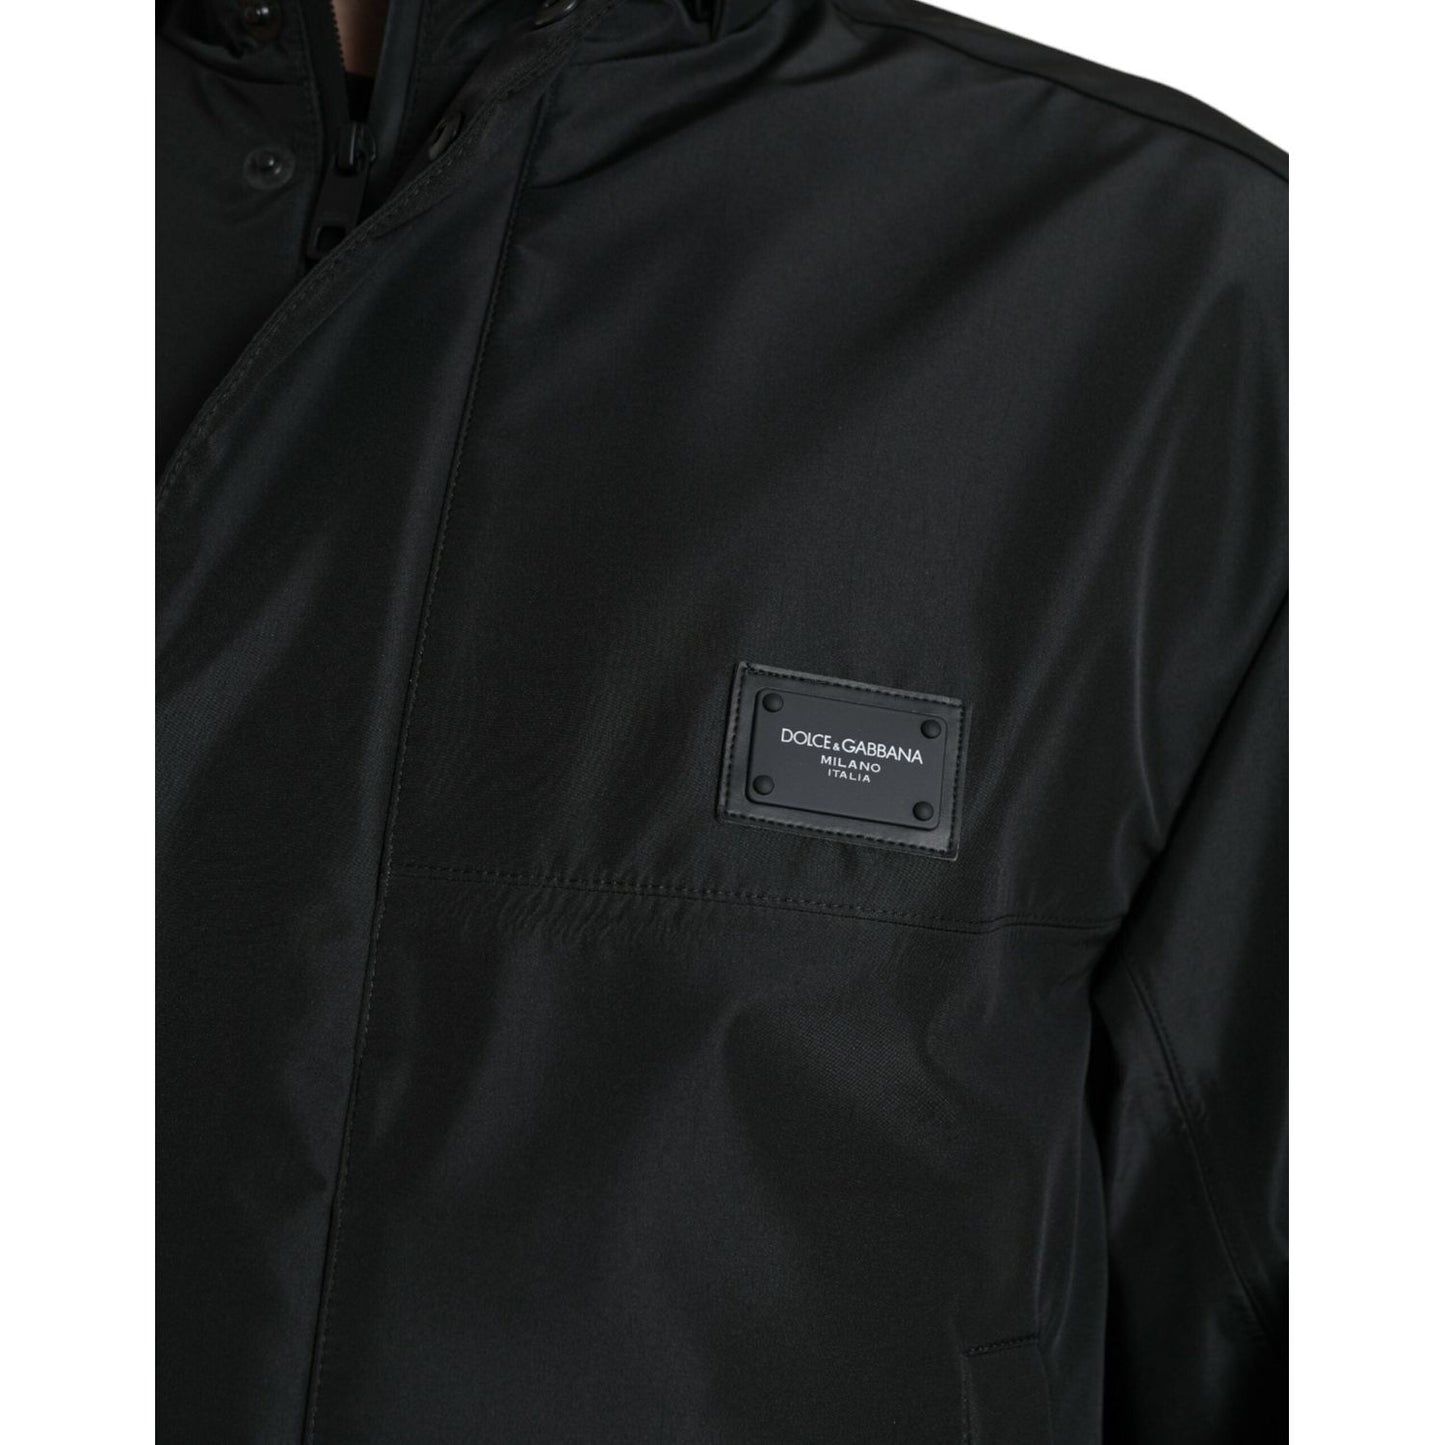 Dolce & Gabbana Sleek Black Windbreaker Jacket black-polyester-logo-plaque-hooded-jacket